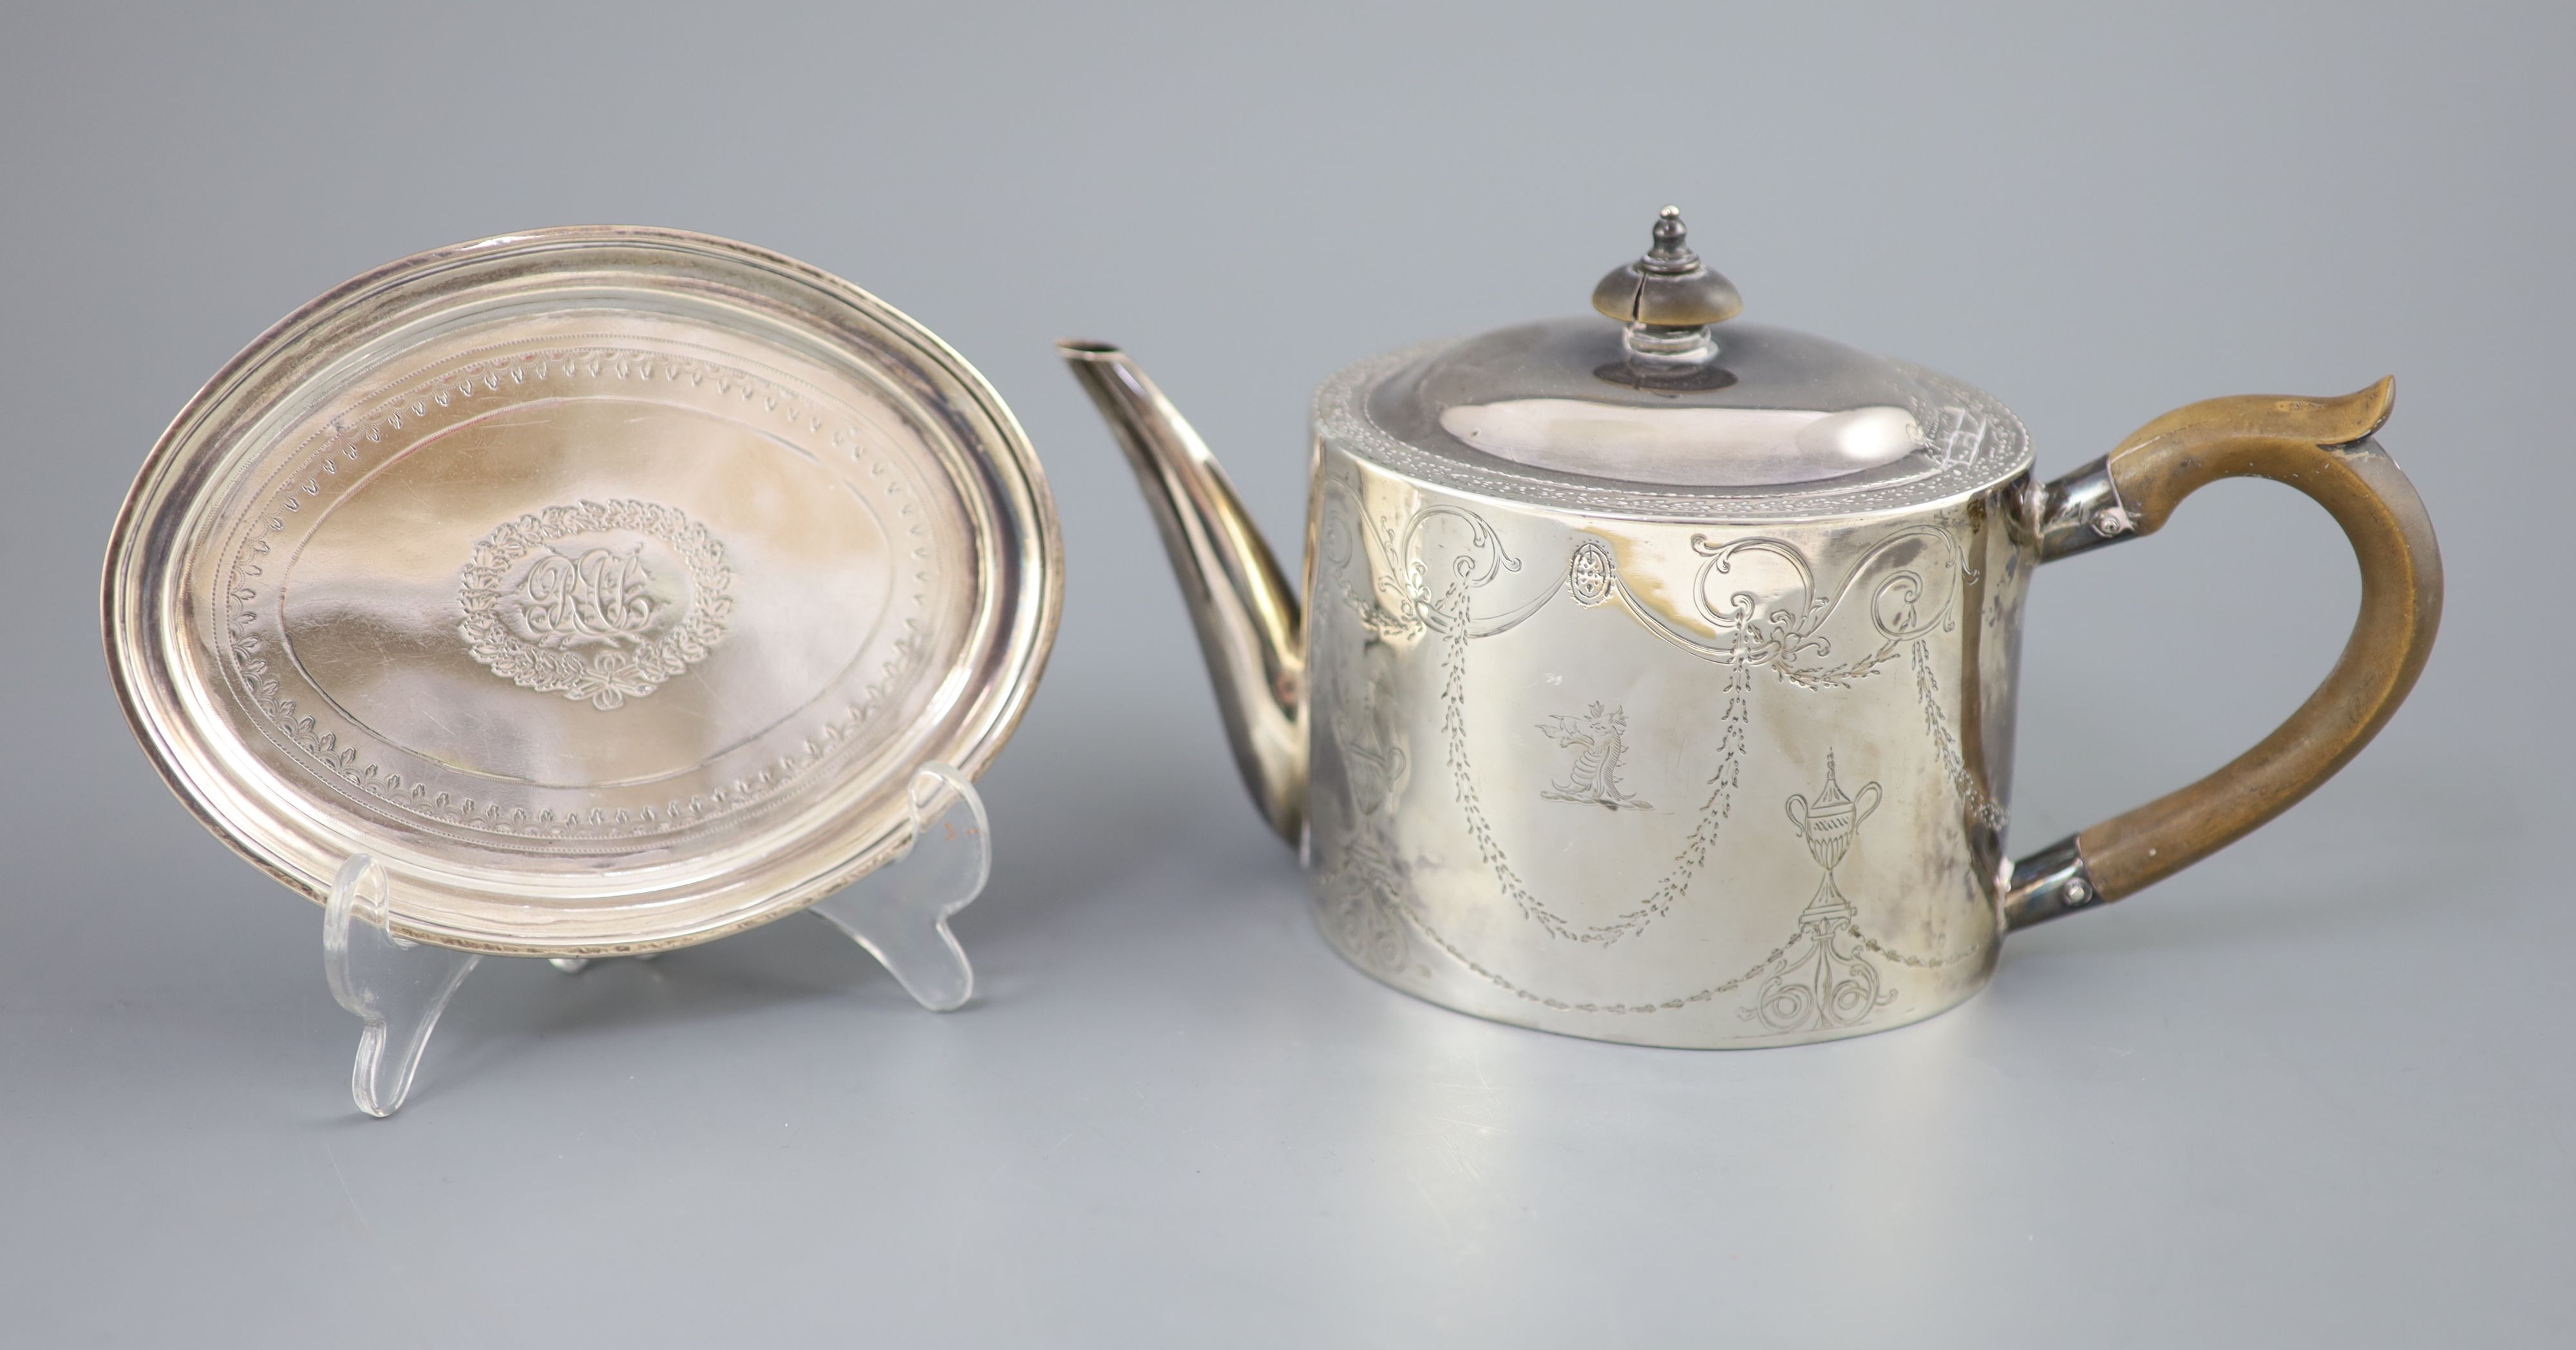 A rare George III provincial silver teapot by John Hampston & John Prince, York, 1780 & associated stand.